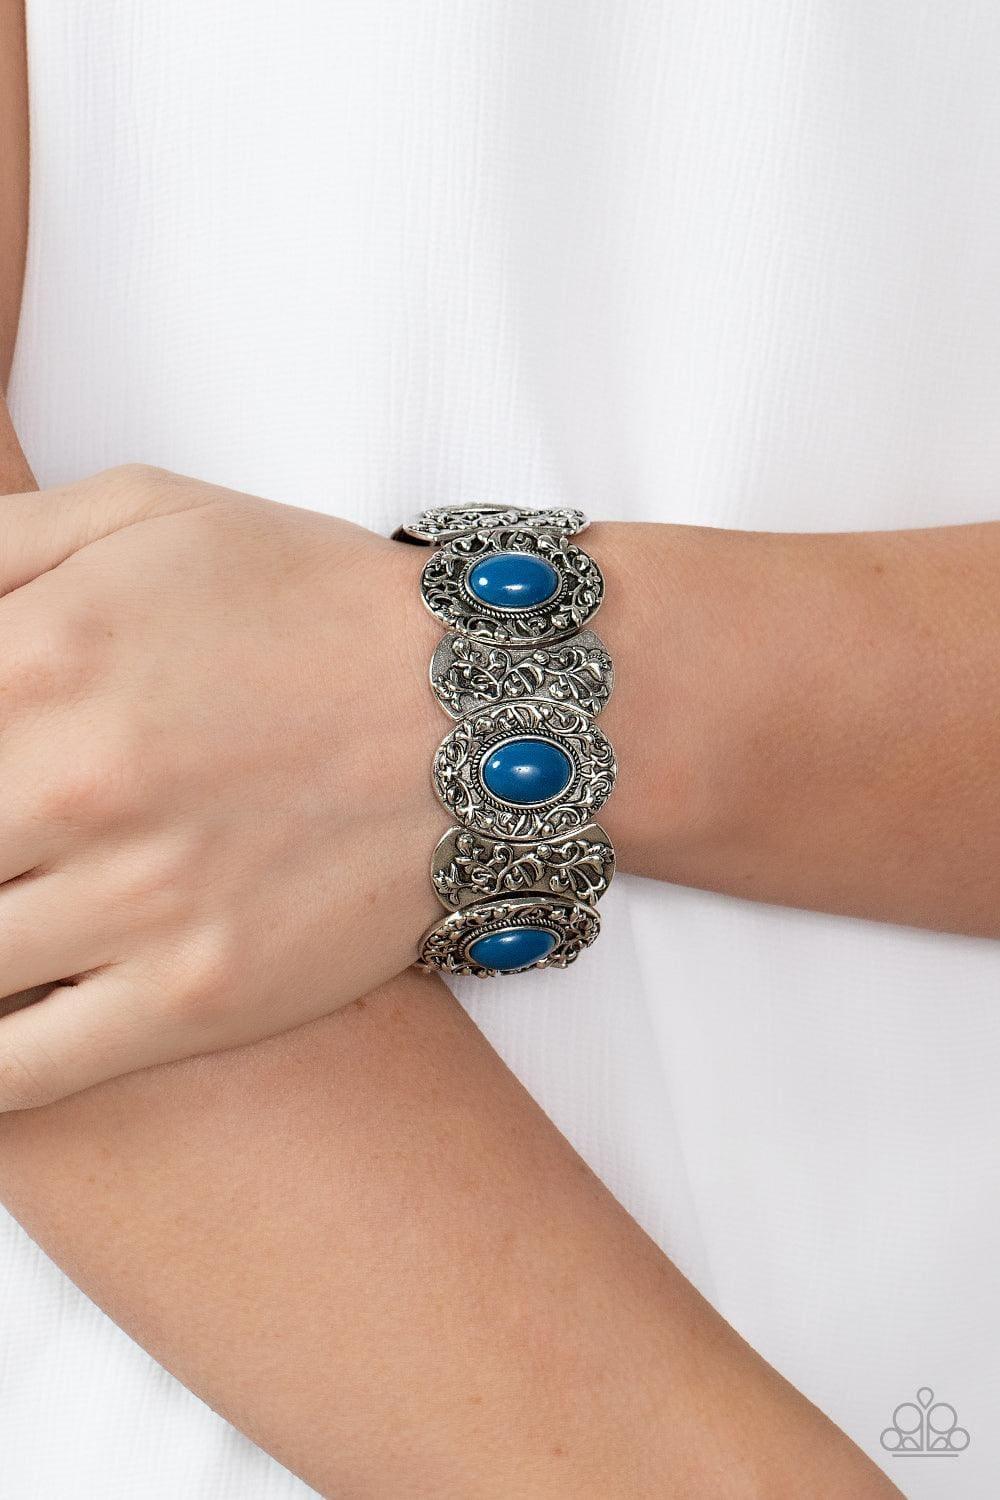 Paparazzi Accessories - Versailles Vineyard - Blue Bracelet - Bling by JessieK